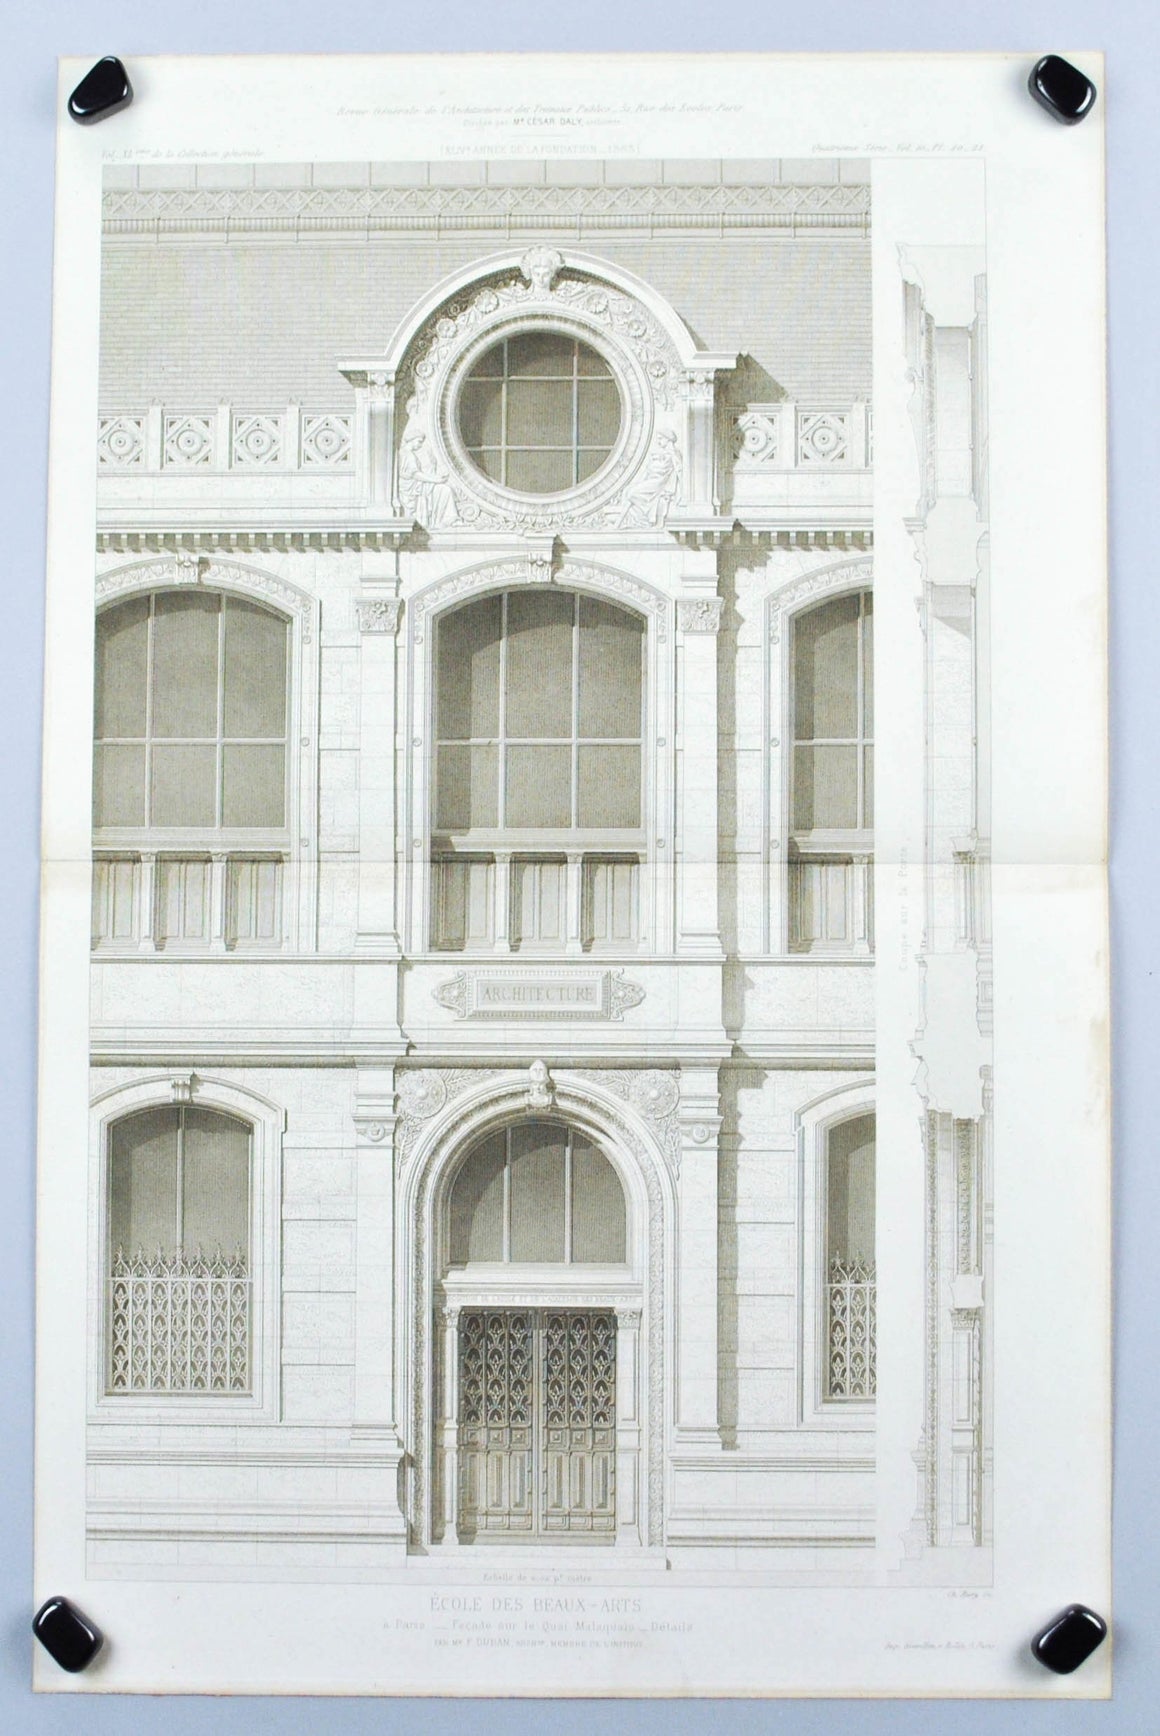 Parisian School of Fine Arts Entry Gate 1883 Architecture Print